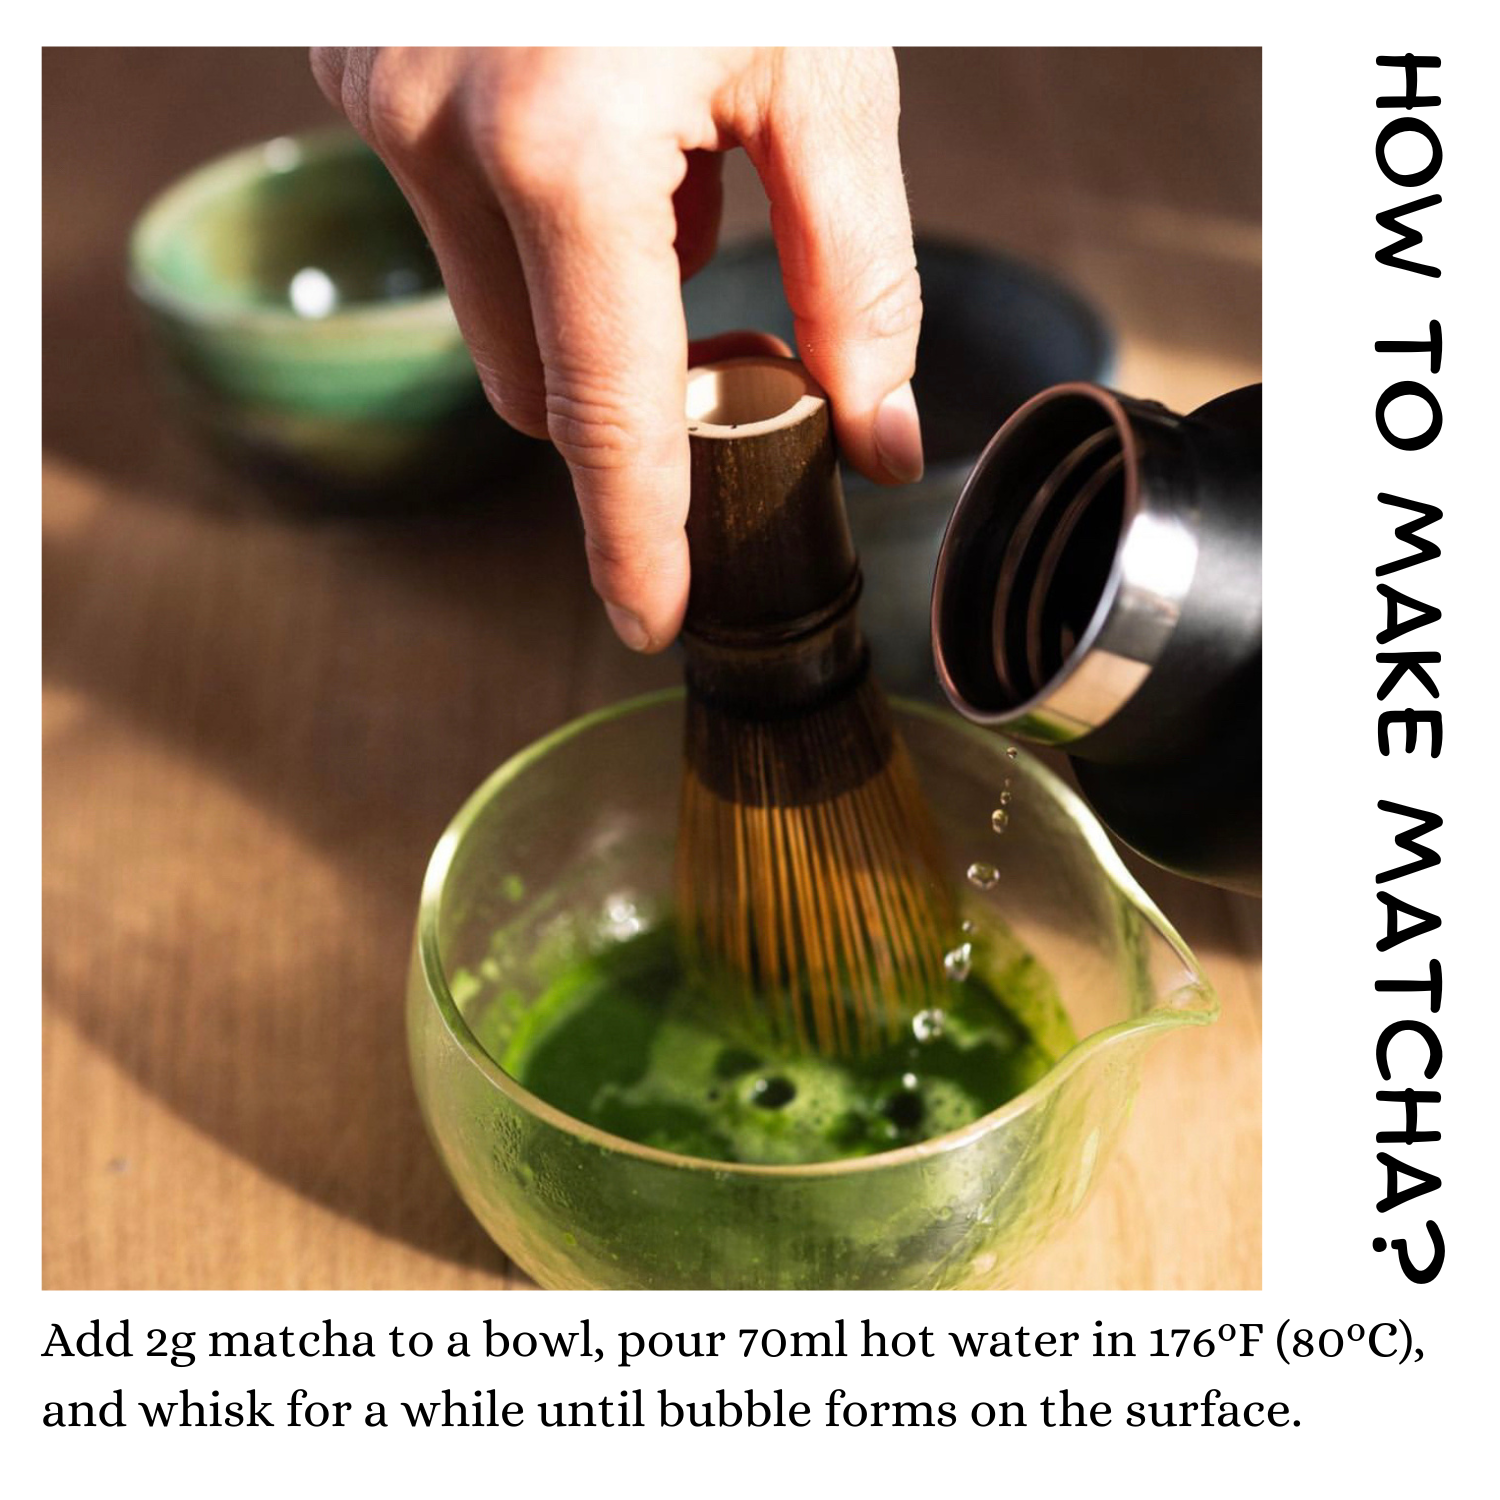 Organic Matcha Tea Powder 100g